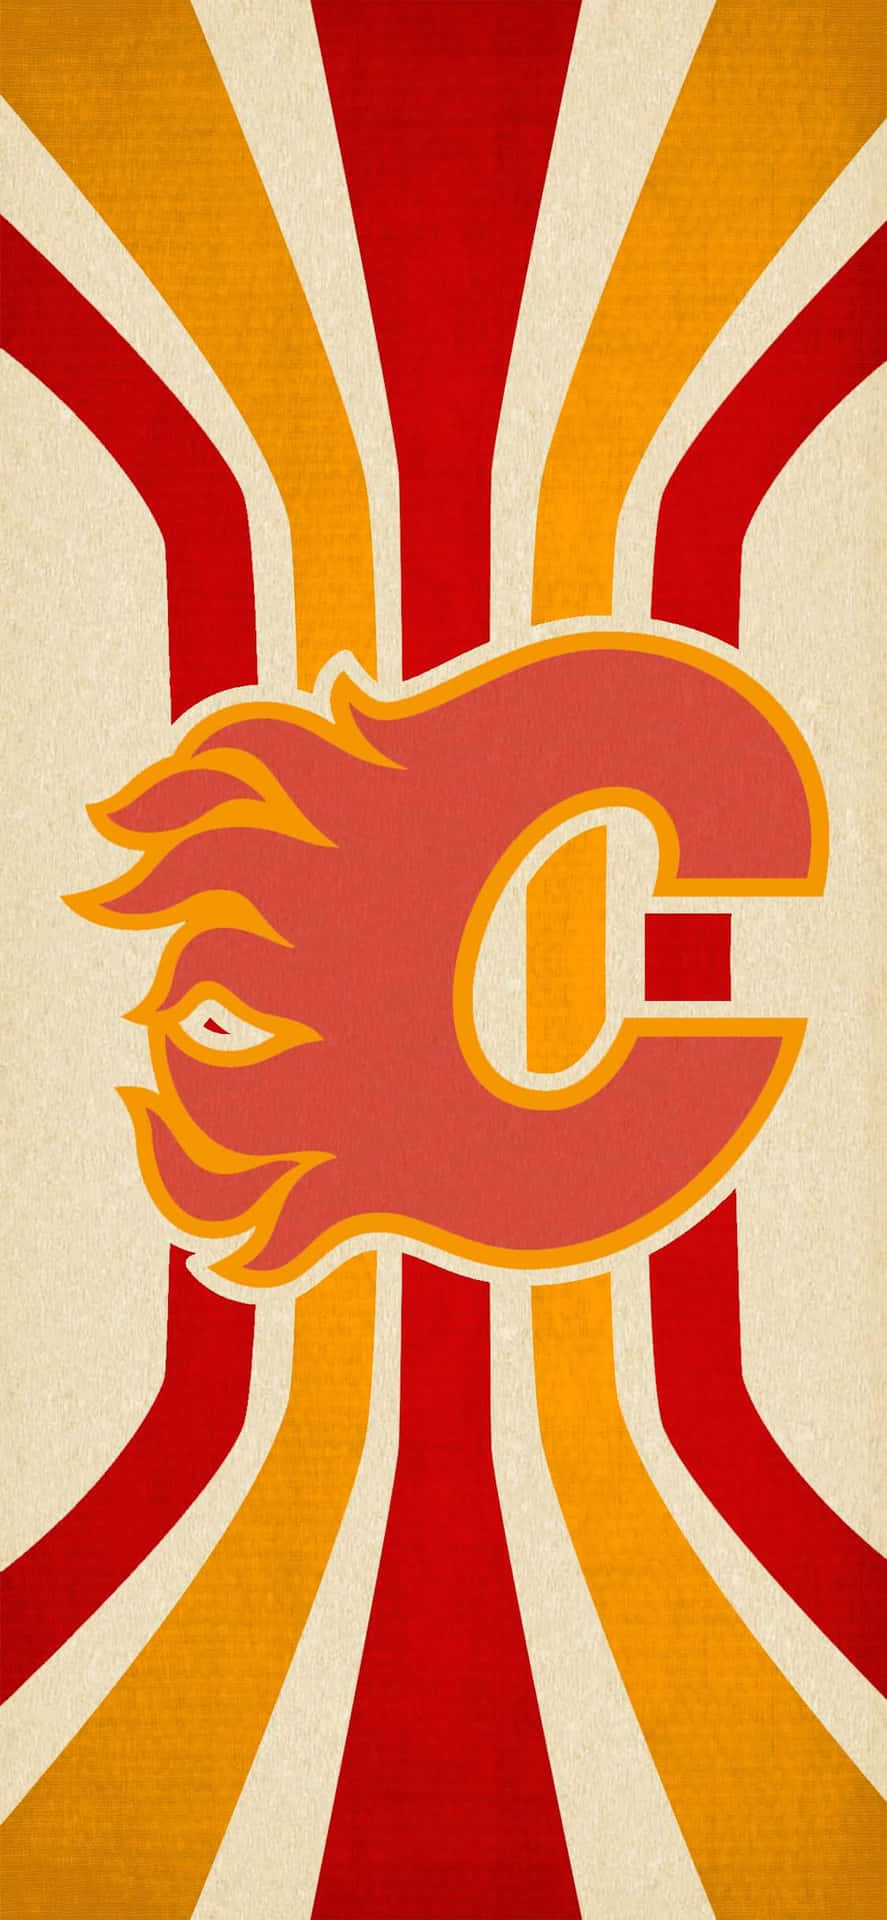 Enaffisch Med Calgary Flames Logotyp På Det